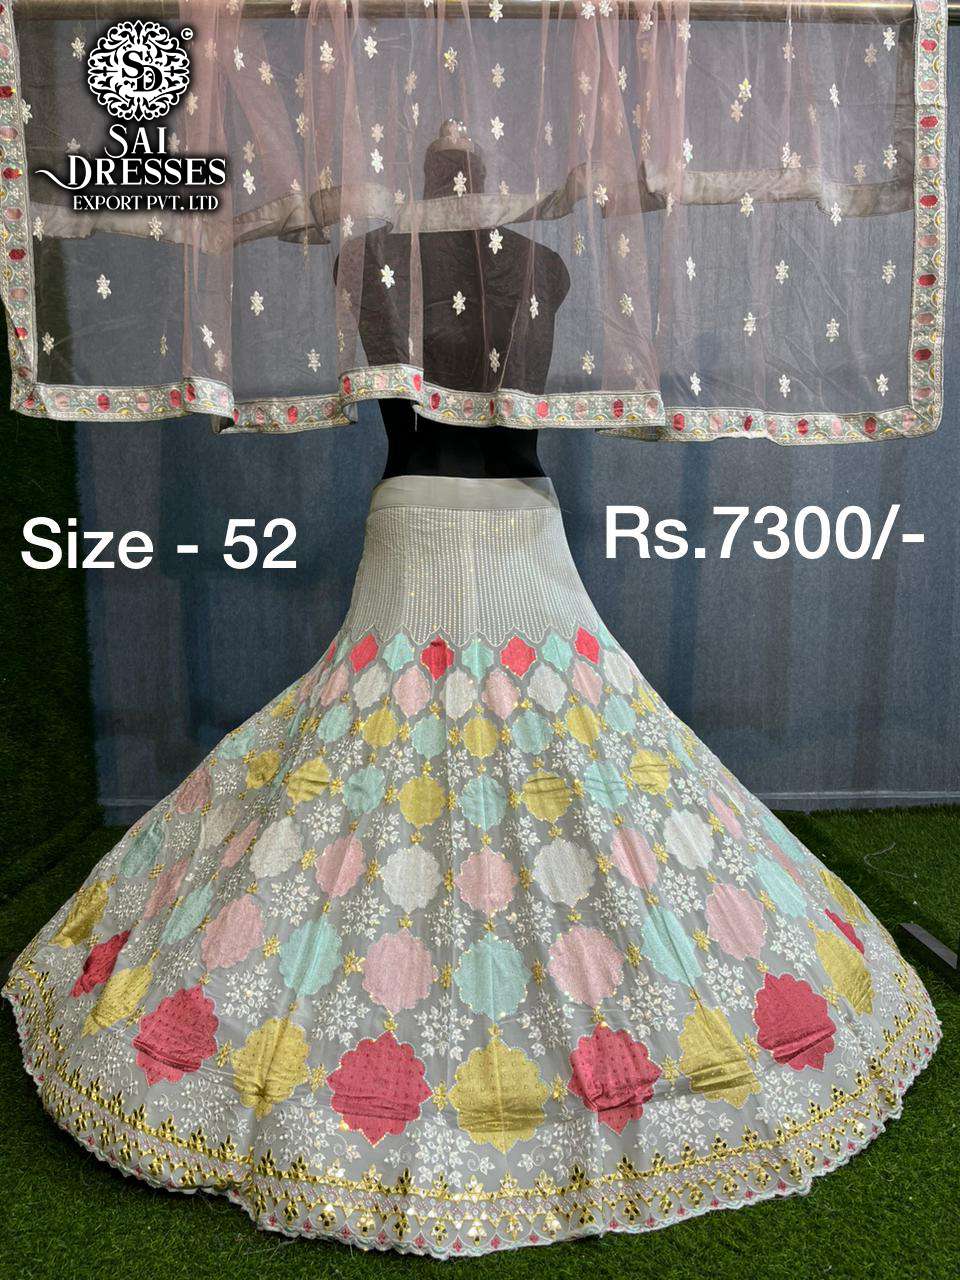 Shop Lehenga Sarees for Women Online at Aza Fashions